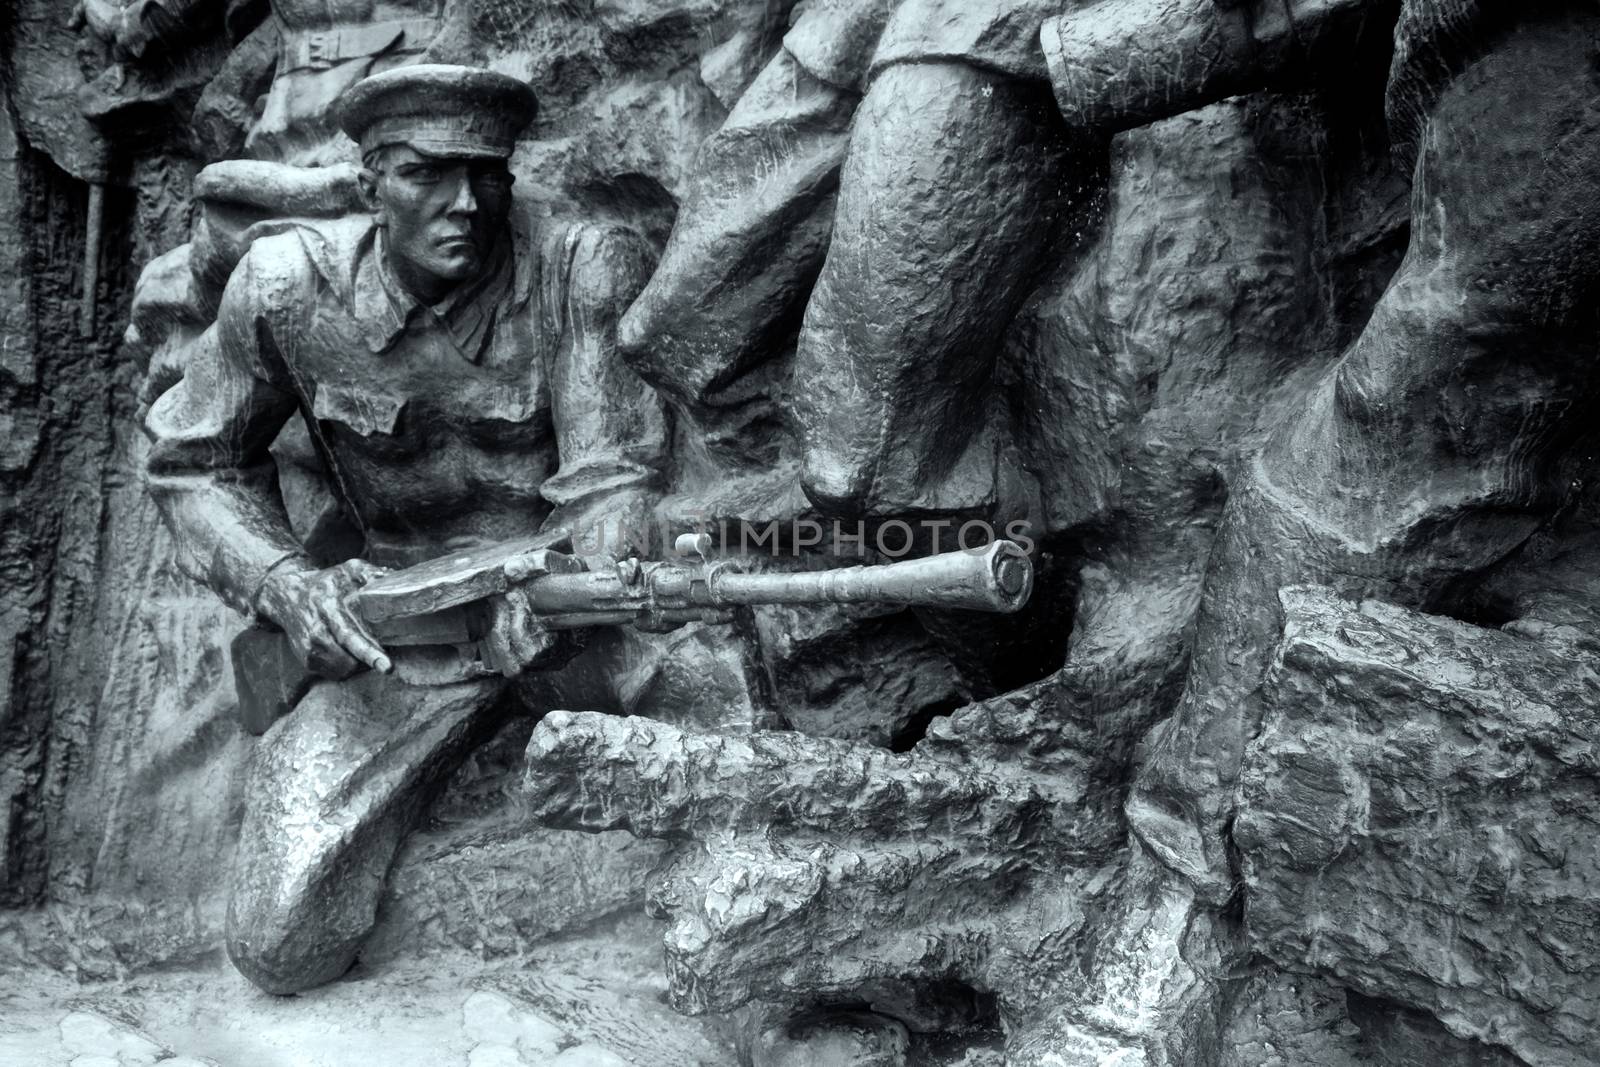 Stone soldier, Great Patriotic War, Kyev, Ukraine